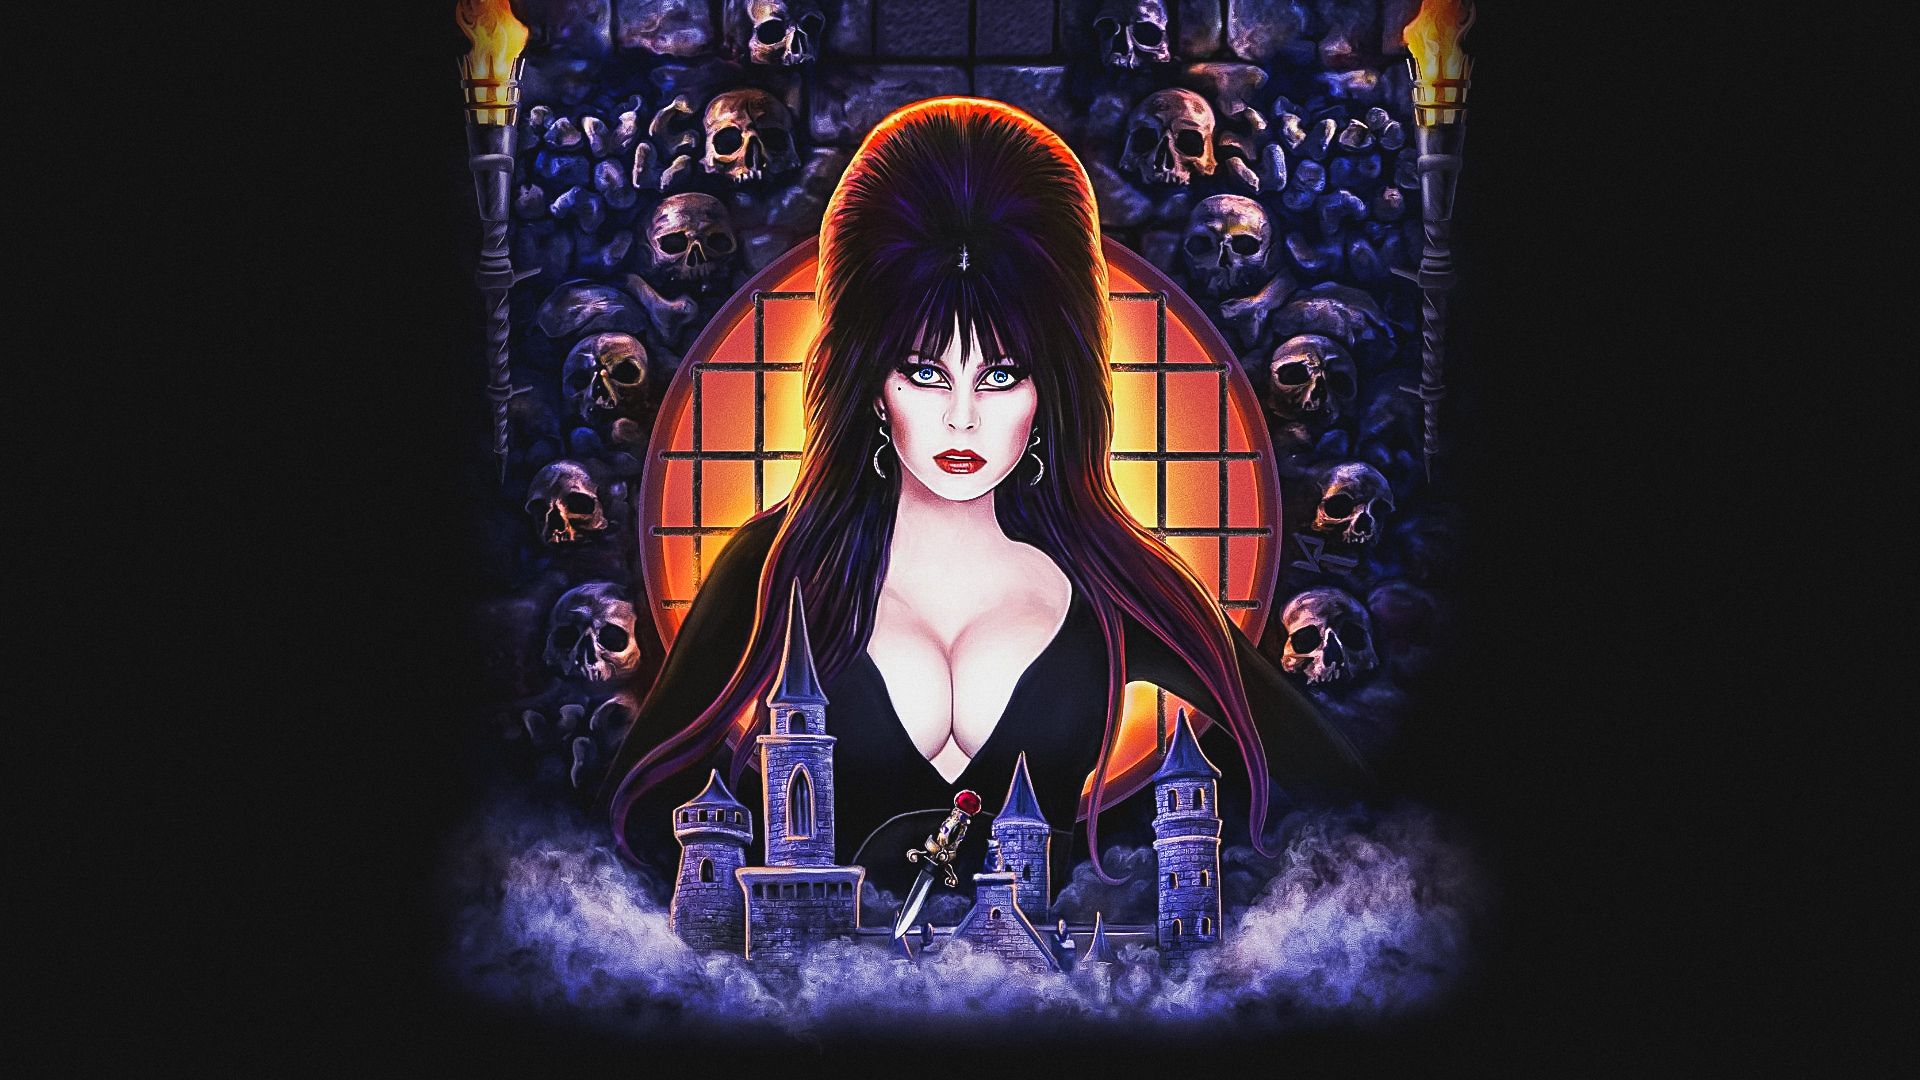 Elvira's Haunted Hills background